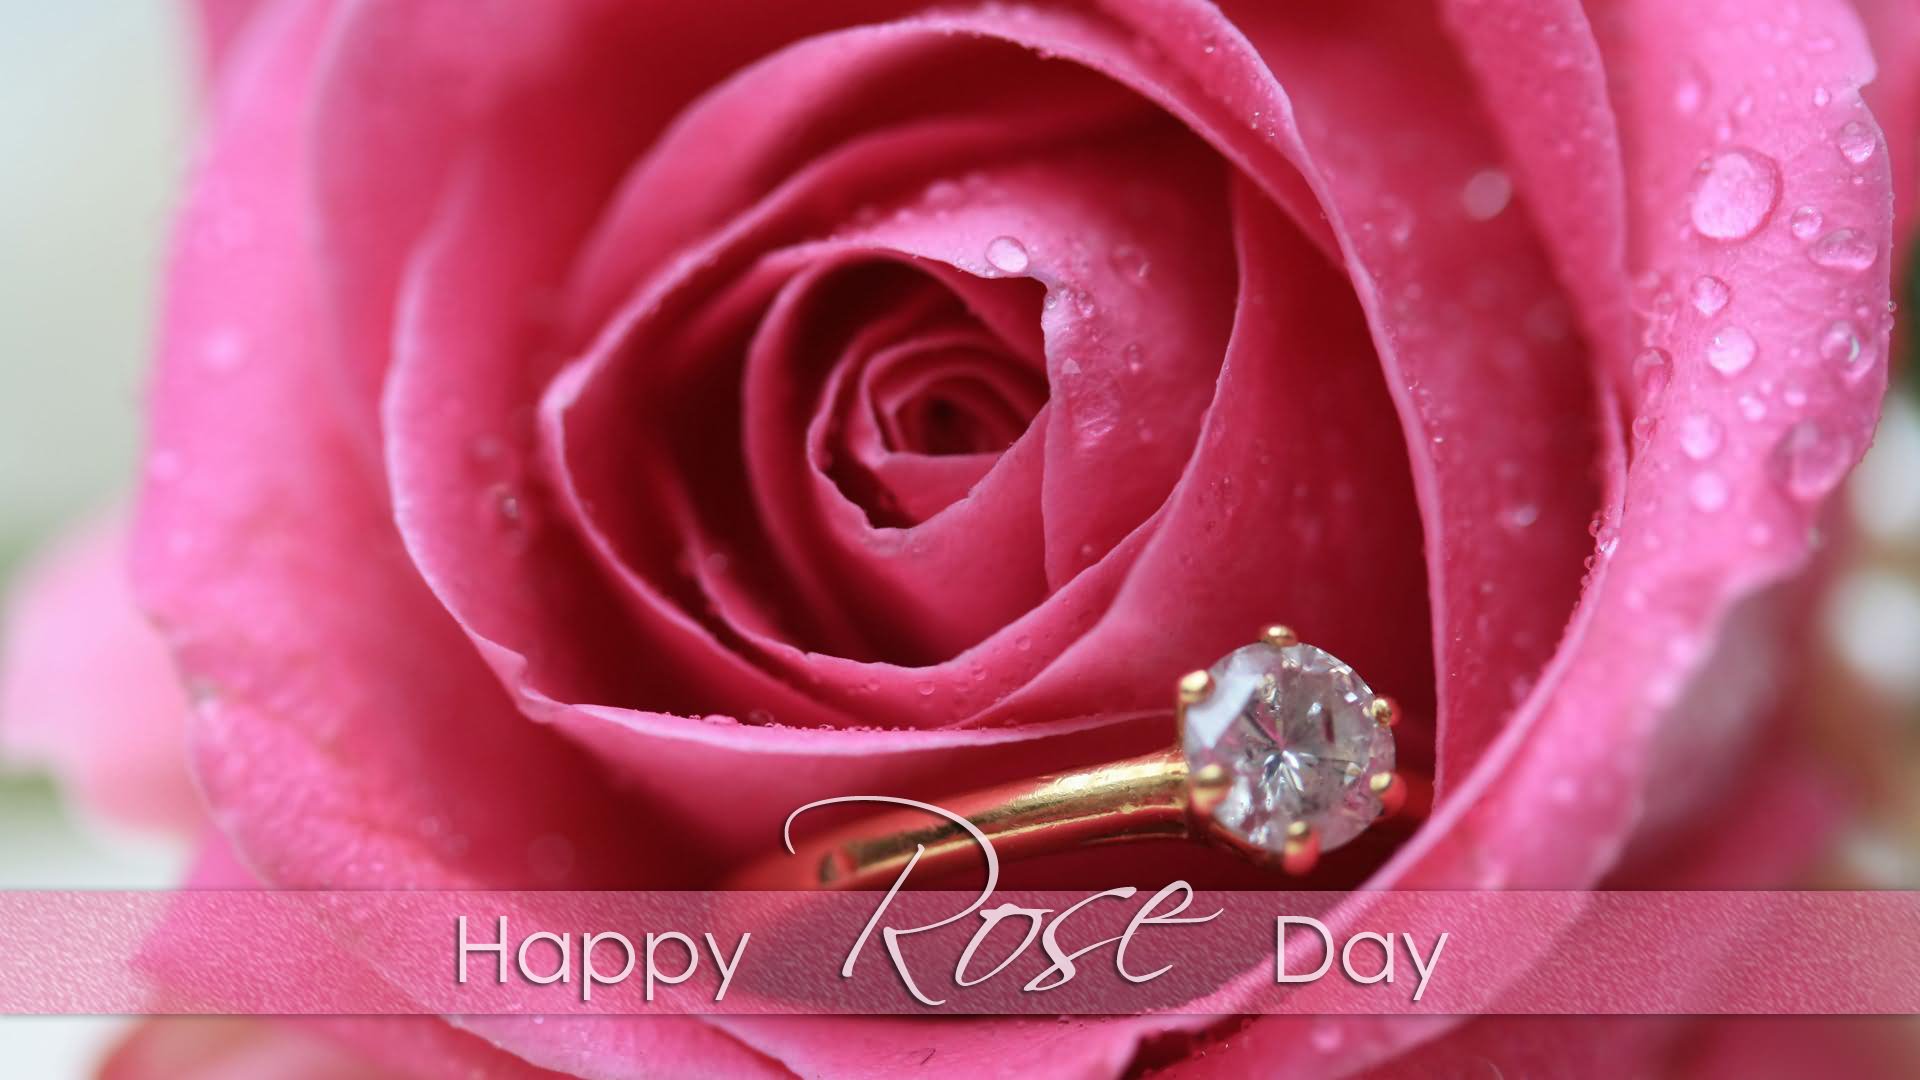 Happy Rose Day Pink Rose Flower